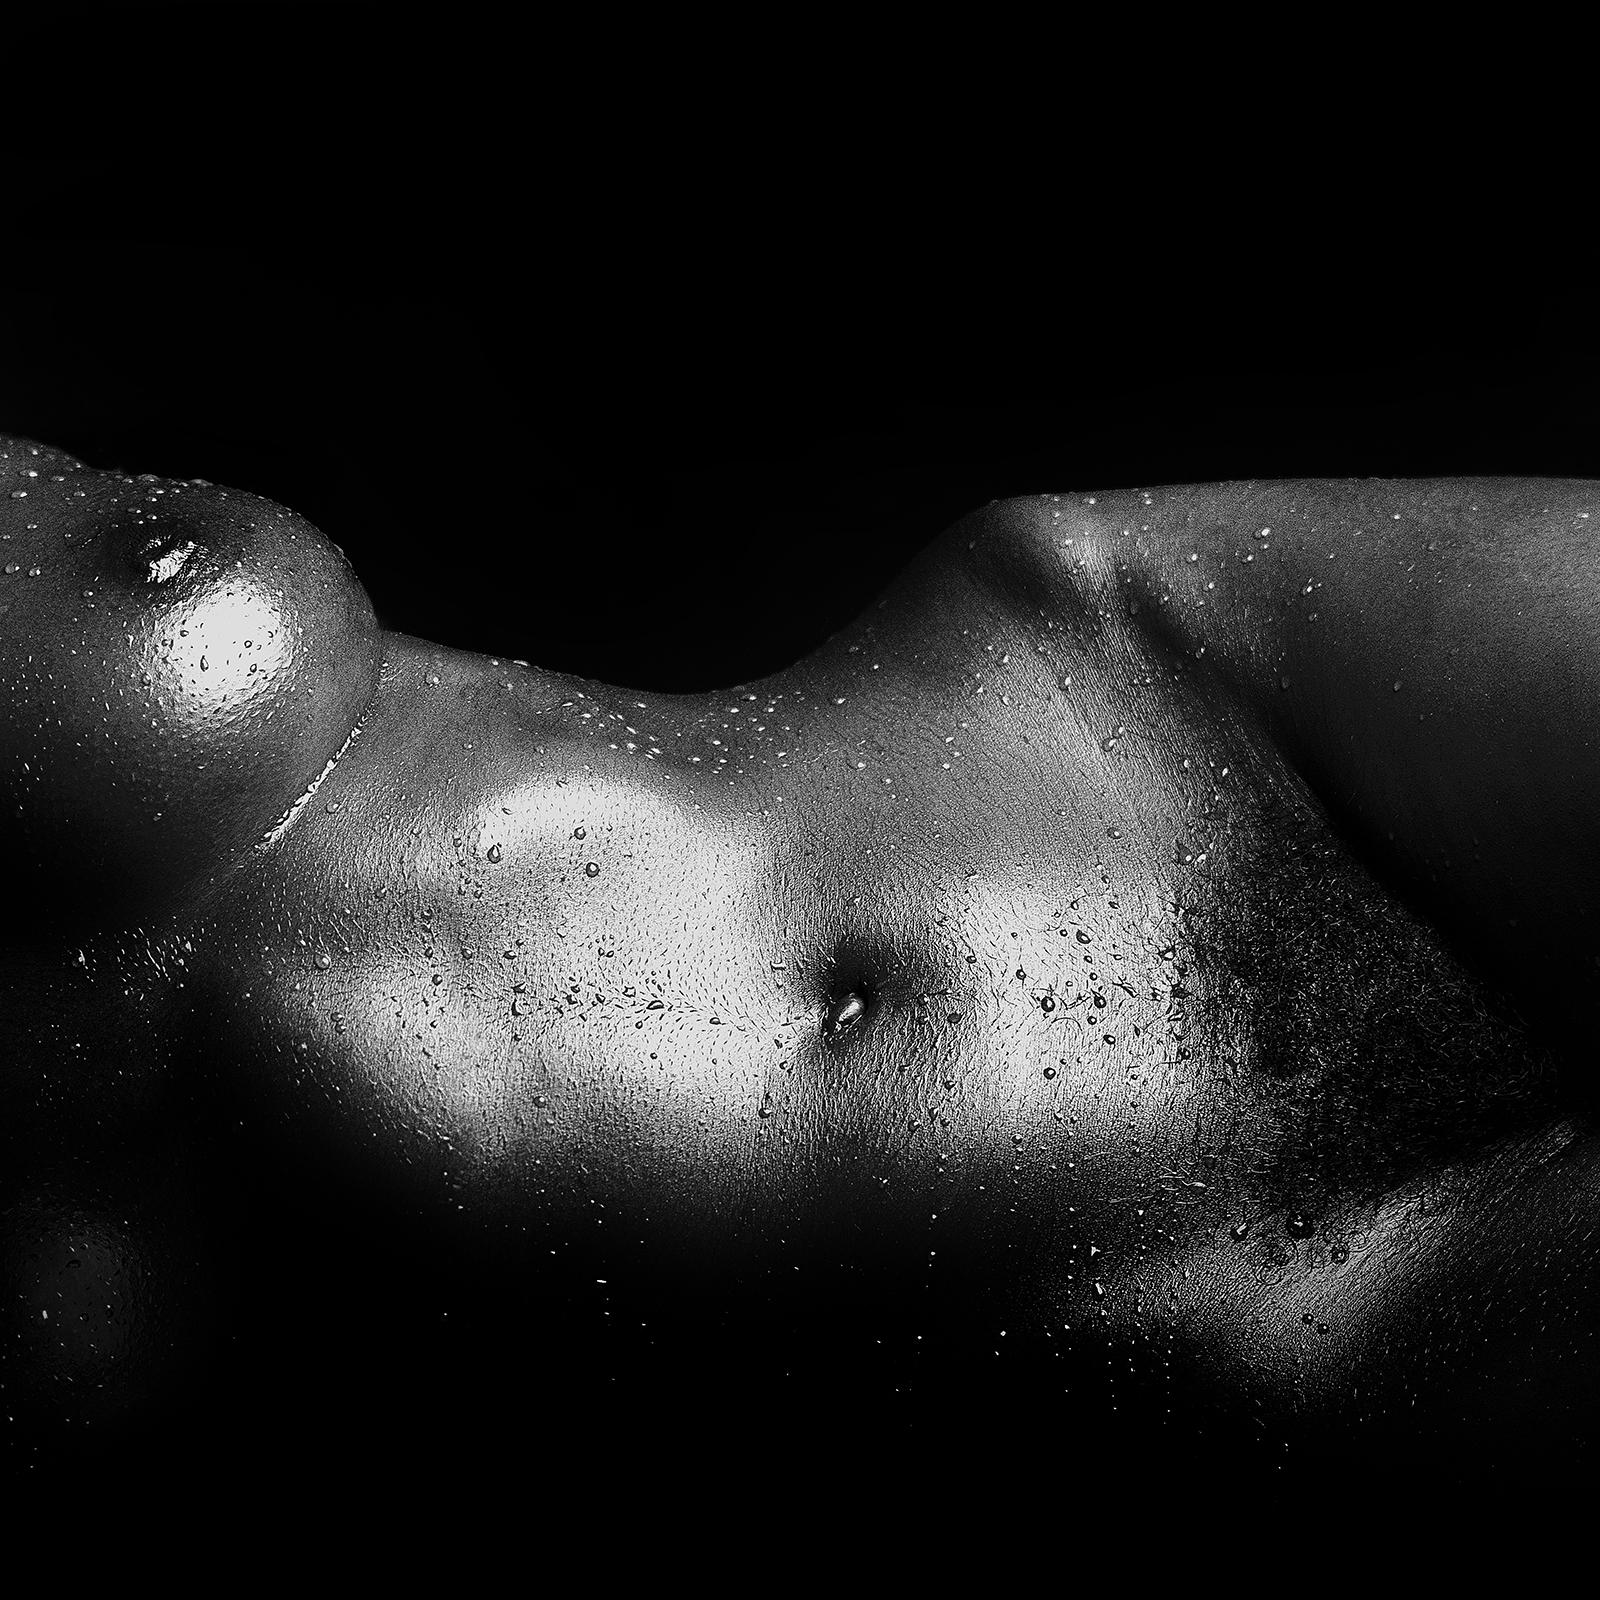 Ian Sanderson Nude Photograph - Jo-Signed limited edition fine art print, Black white photo, Nude, Square, Model